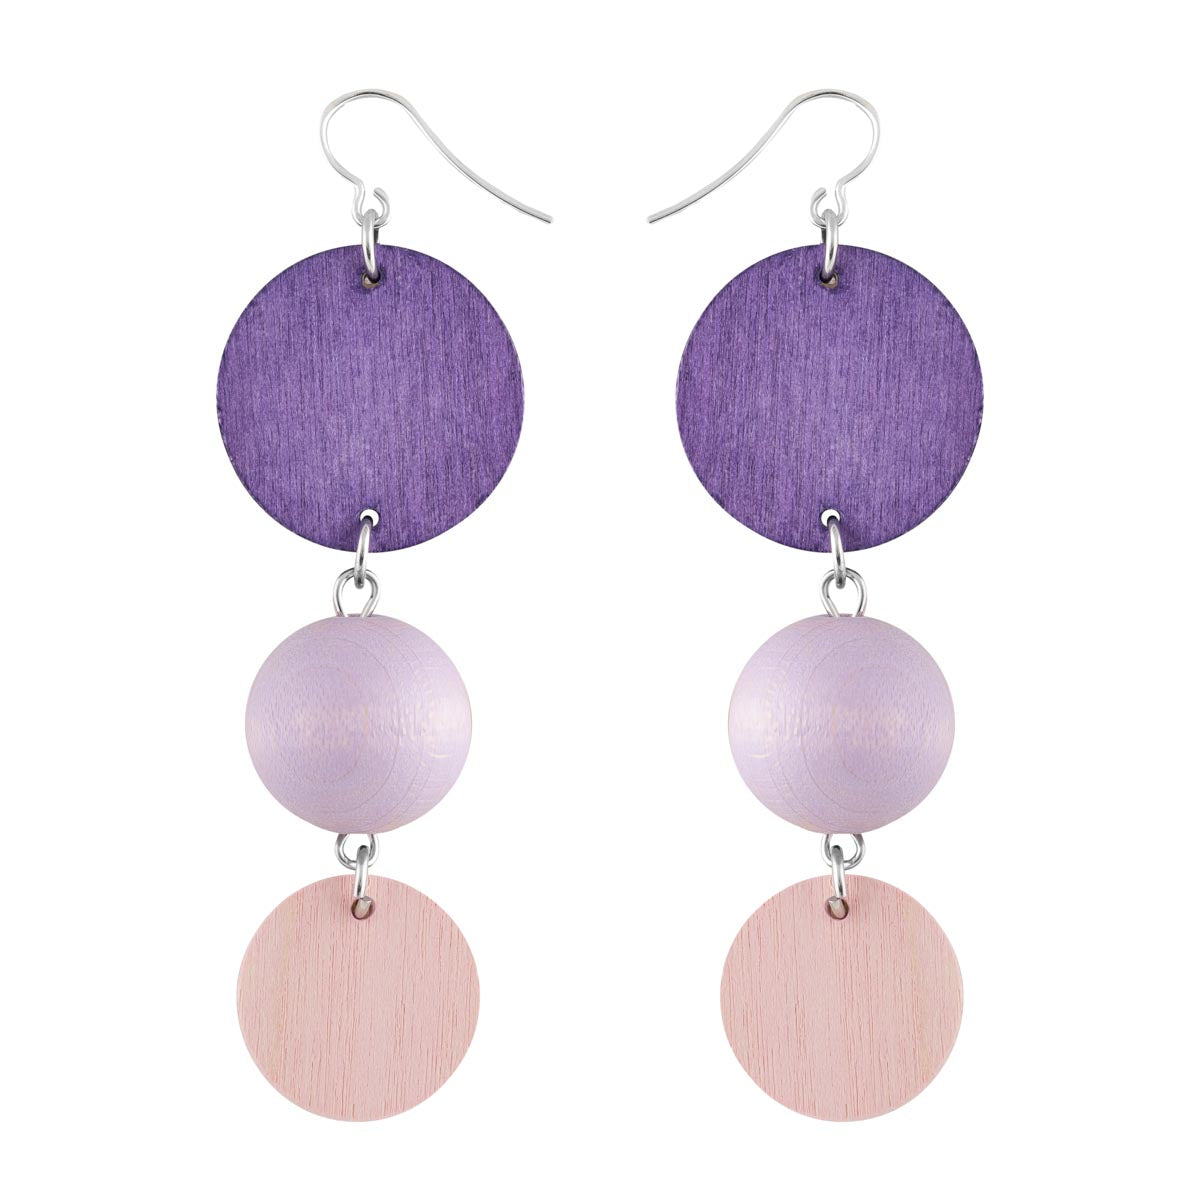 Apollo earrings, shades of purple